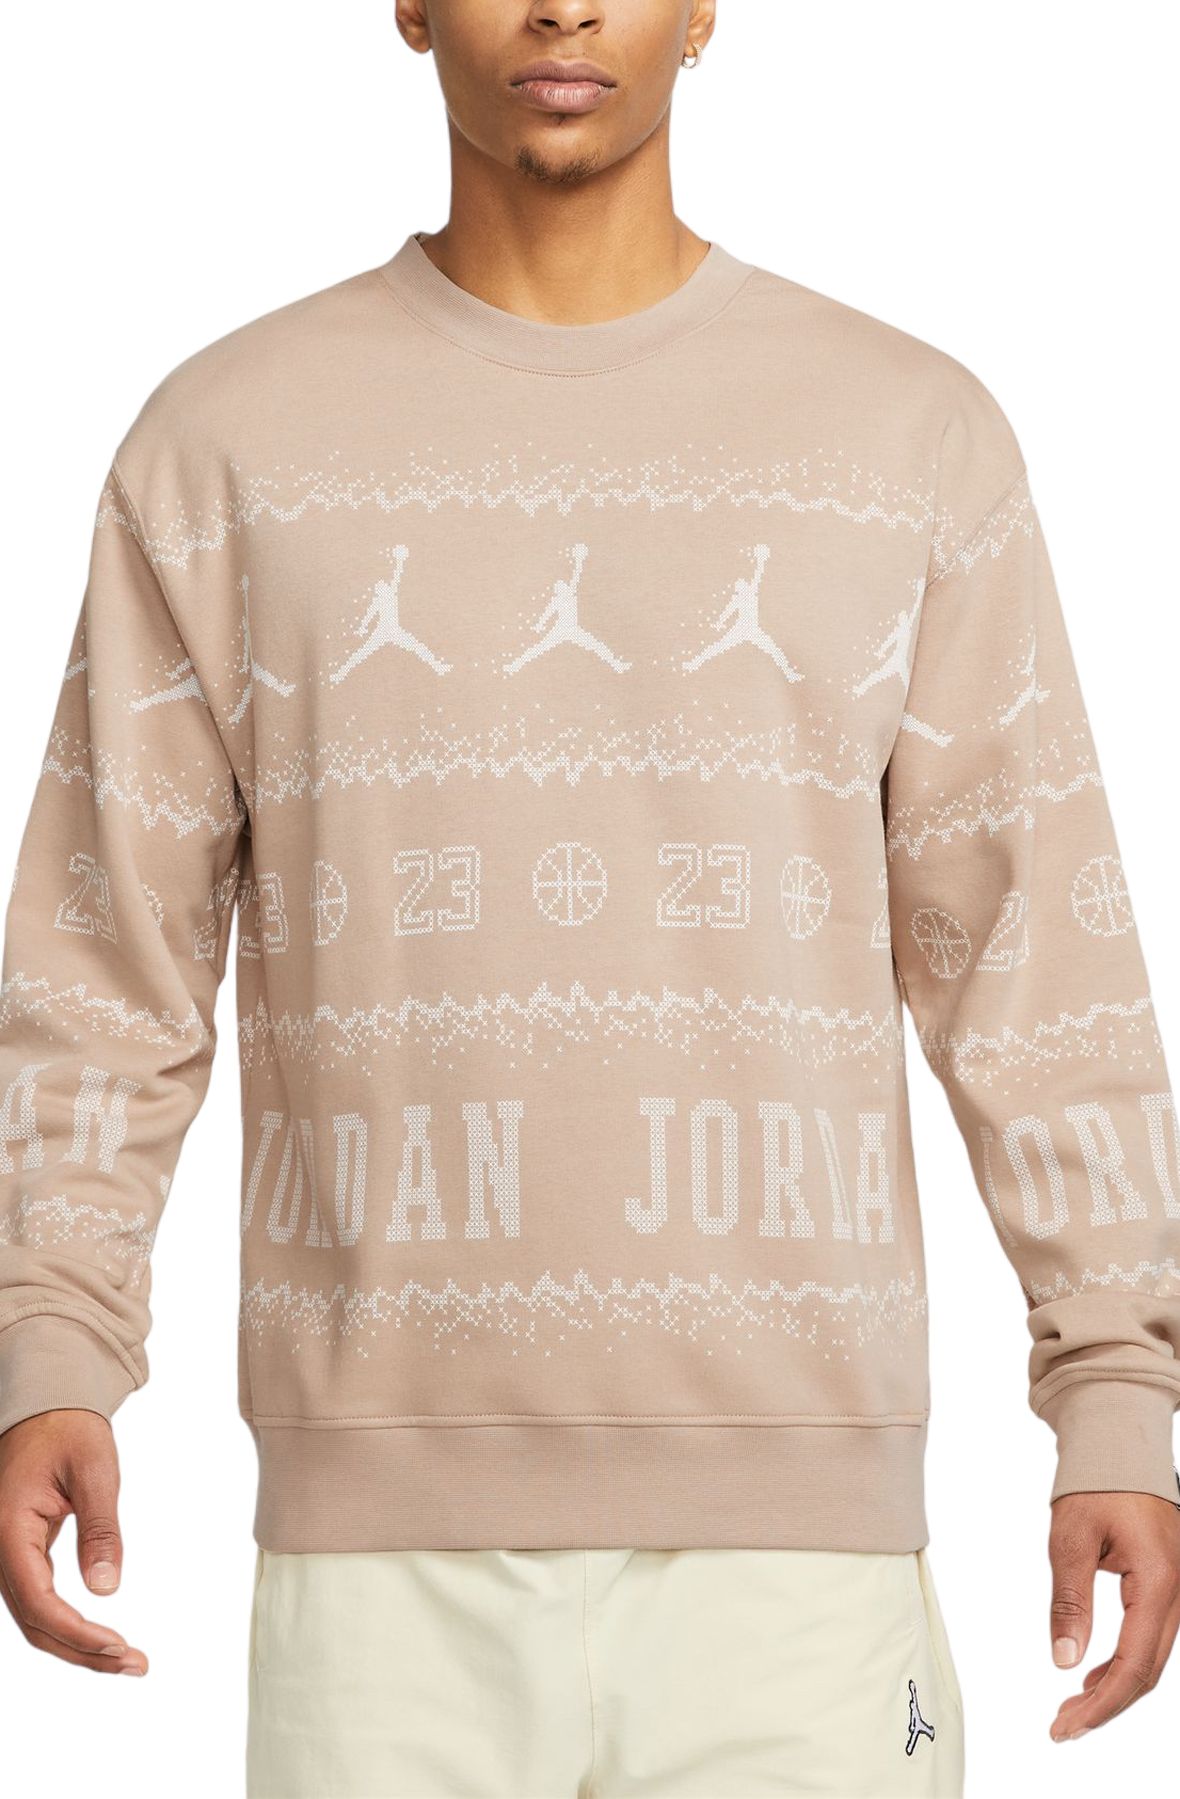 JORDAN Essentials Holiday Fleece Crewneck Sweatshirt FD7463 200 - Shiekh